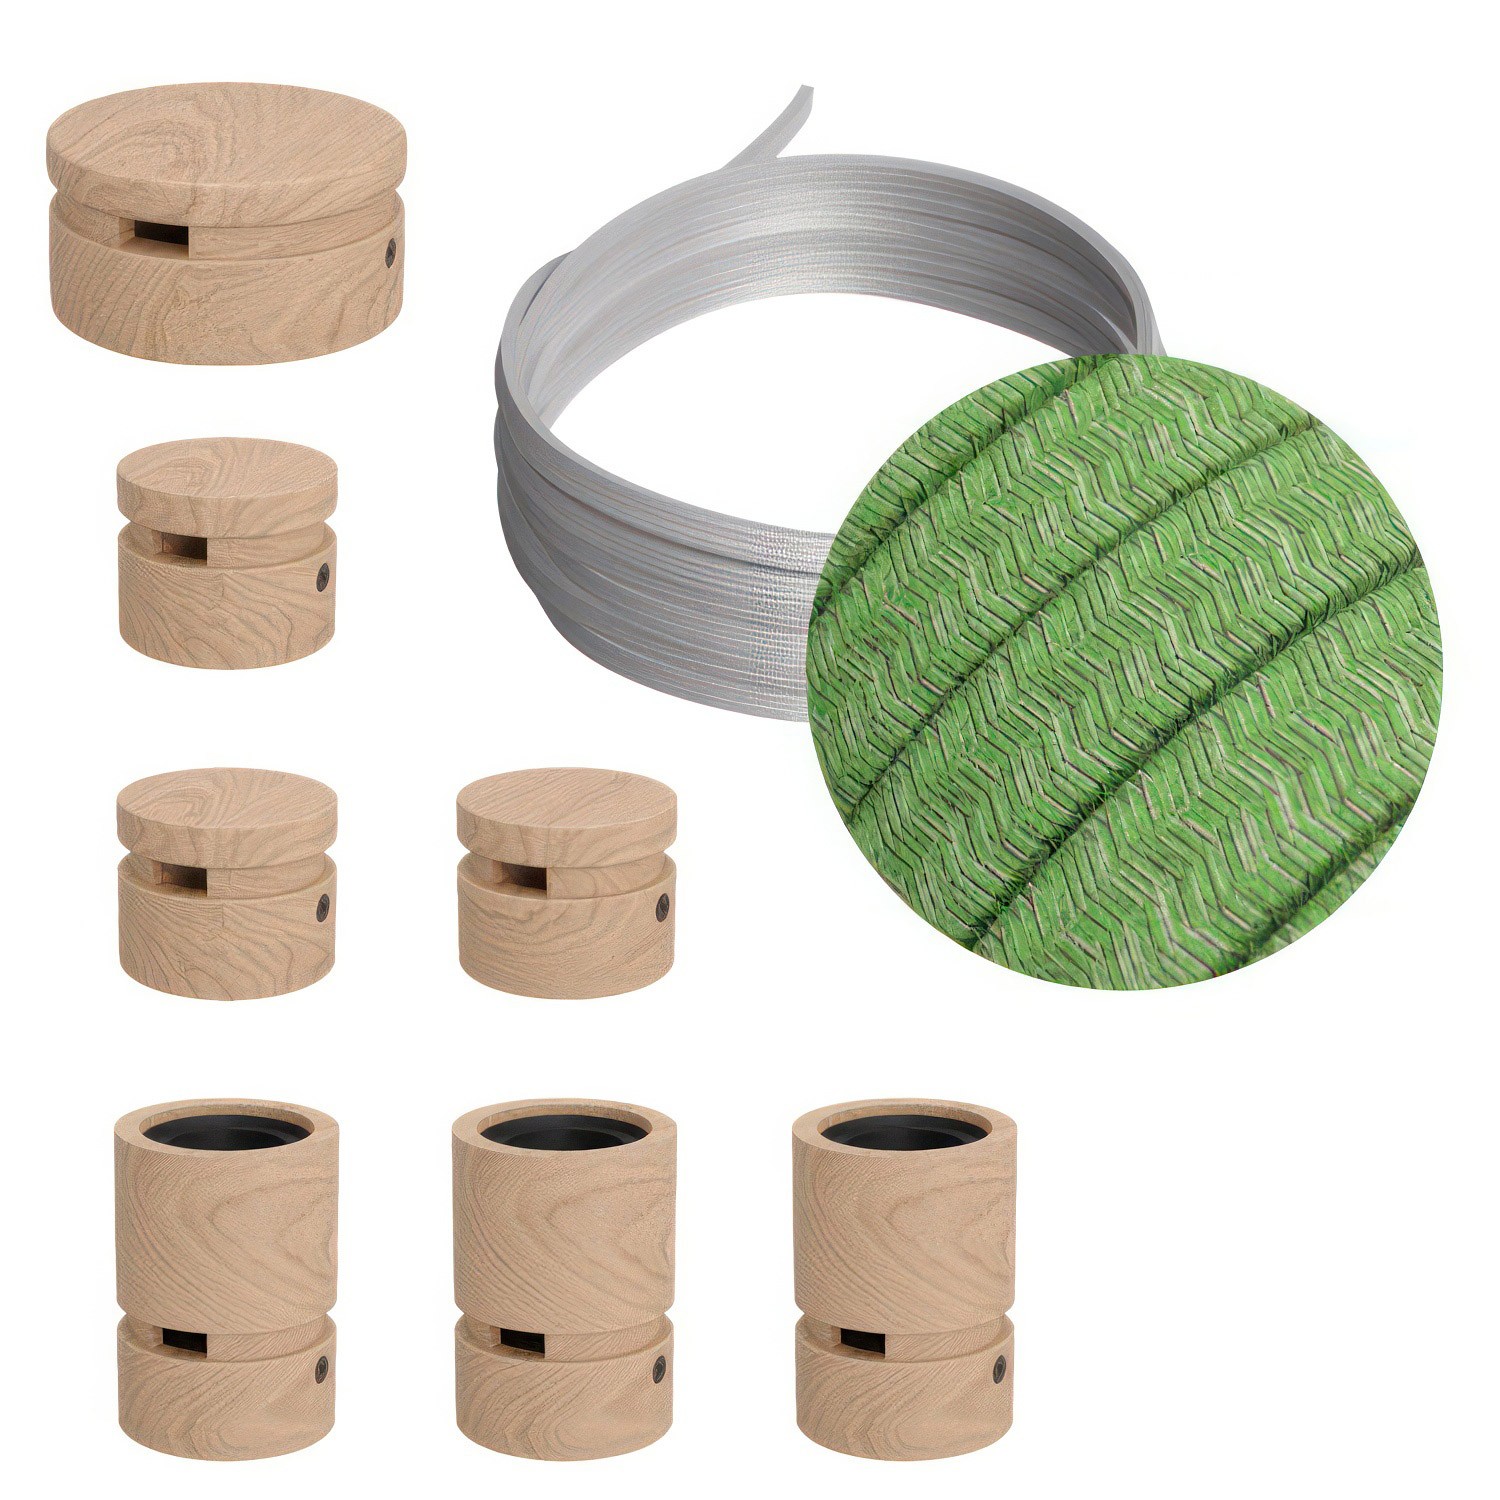 Kit Linear Filé System - con 5m cable textil guirnalda y 7 accesorios de madera